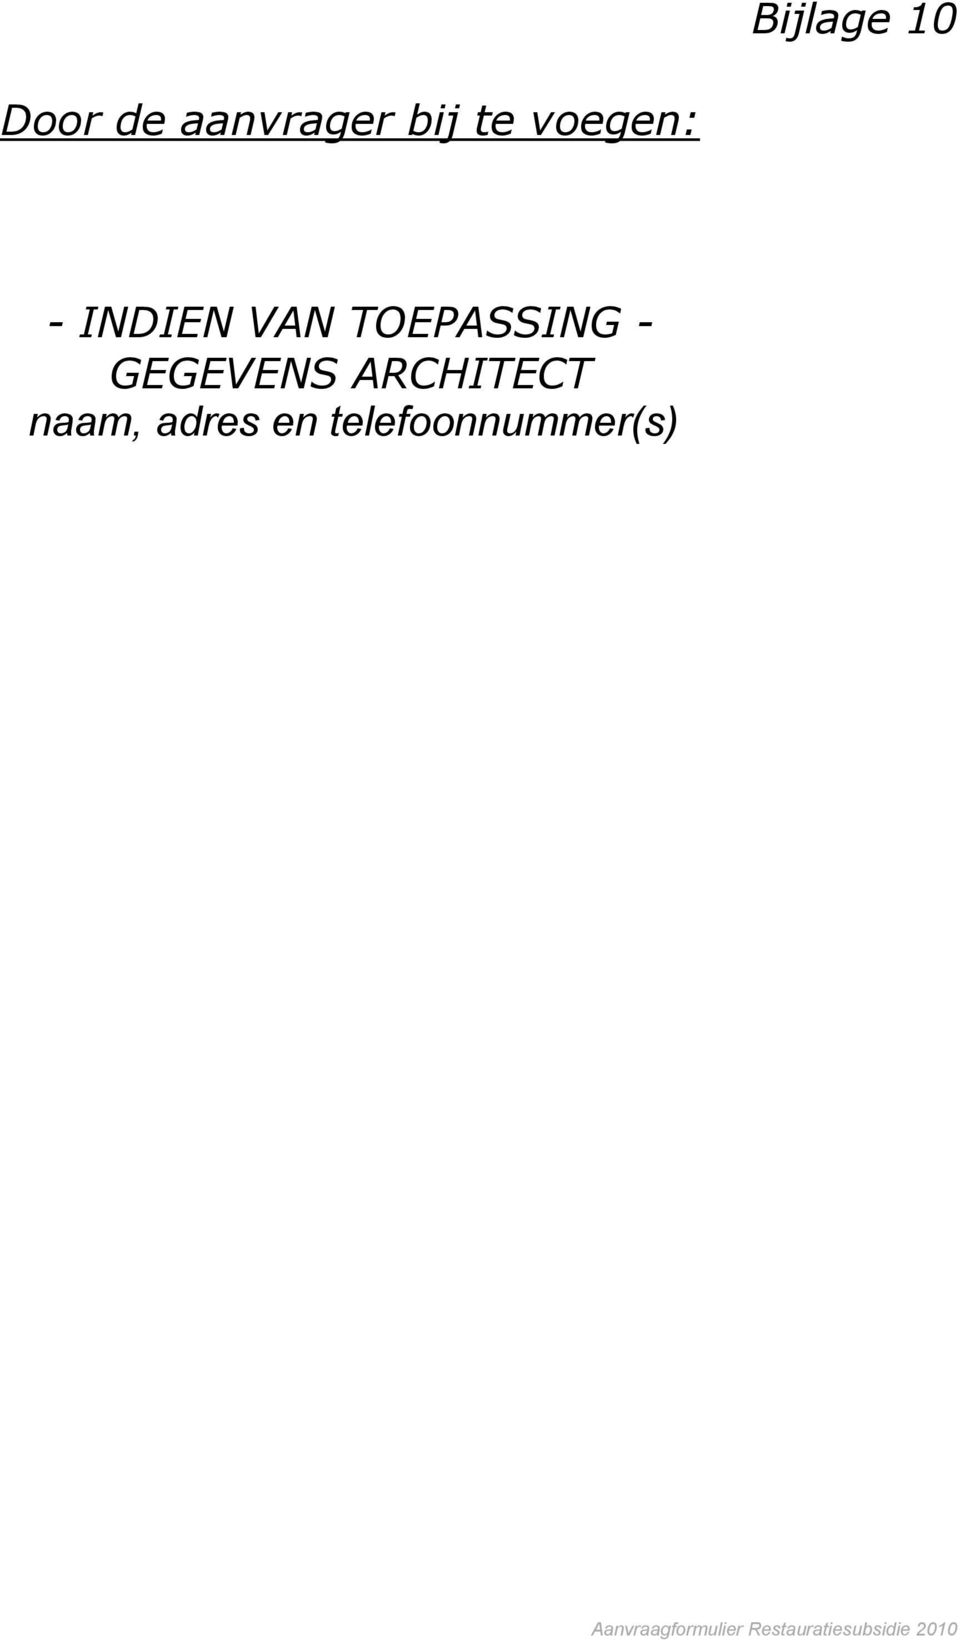 GEGEVENS ARCHITECT